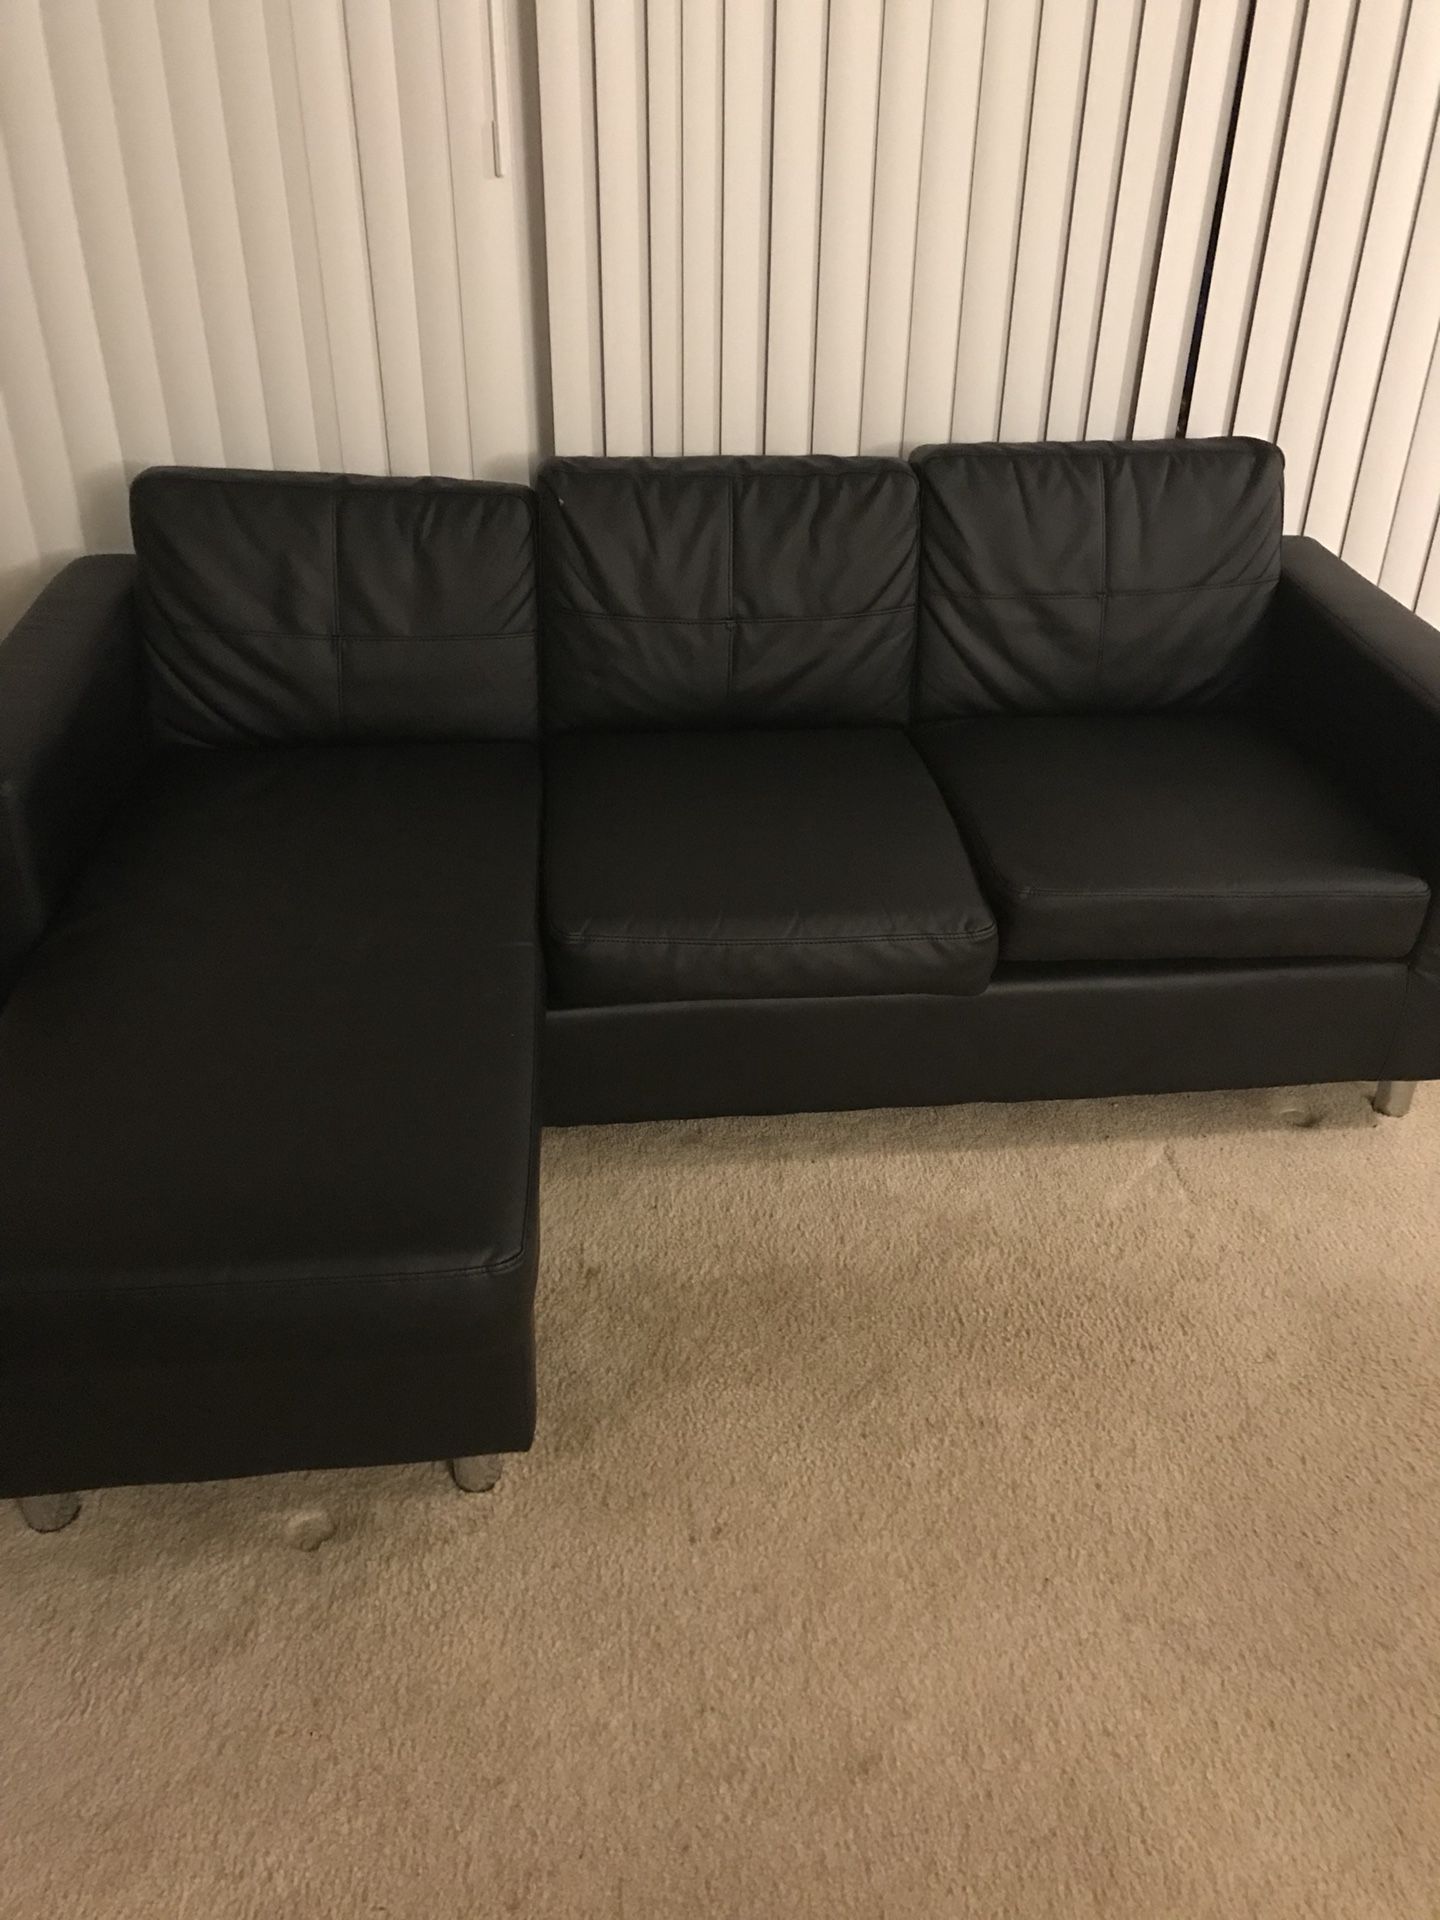 Black leather Sofa Good Condition